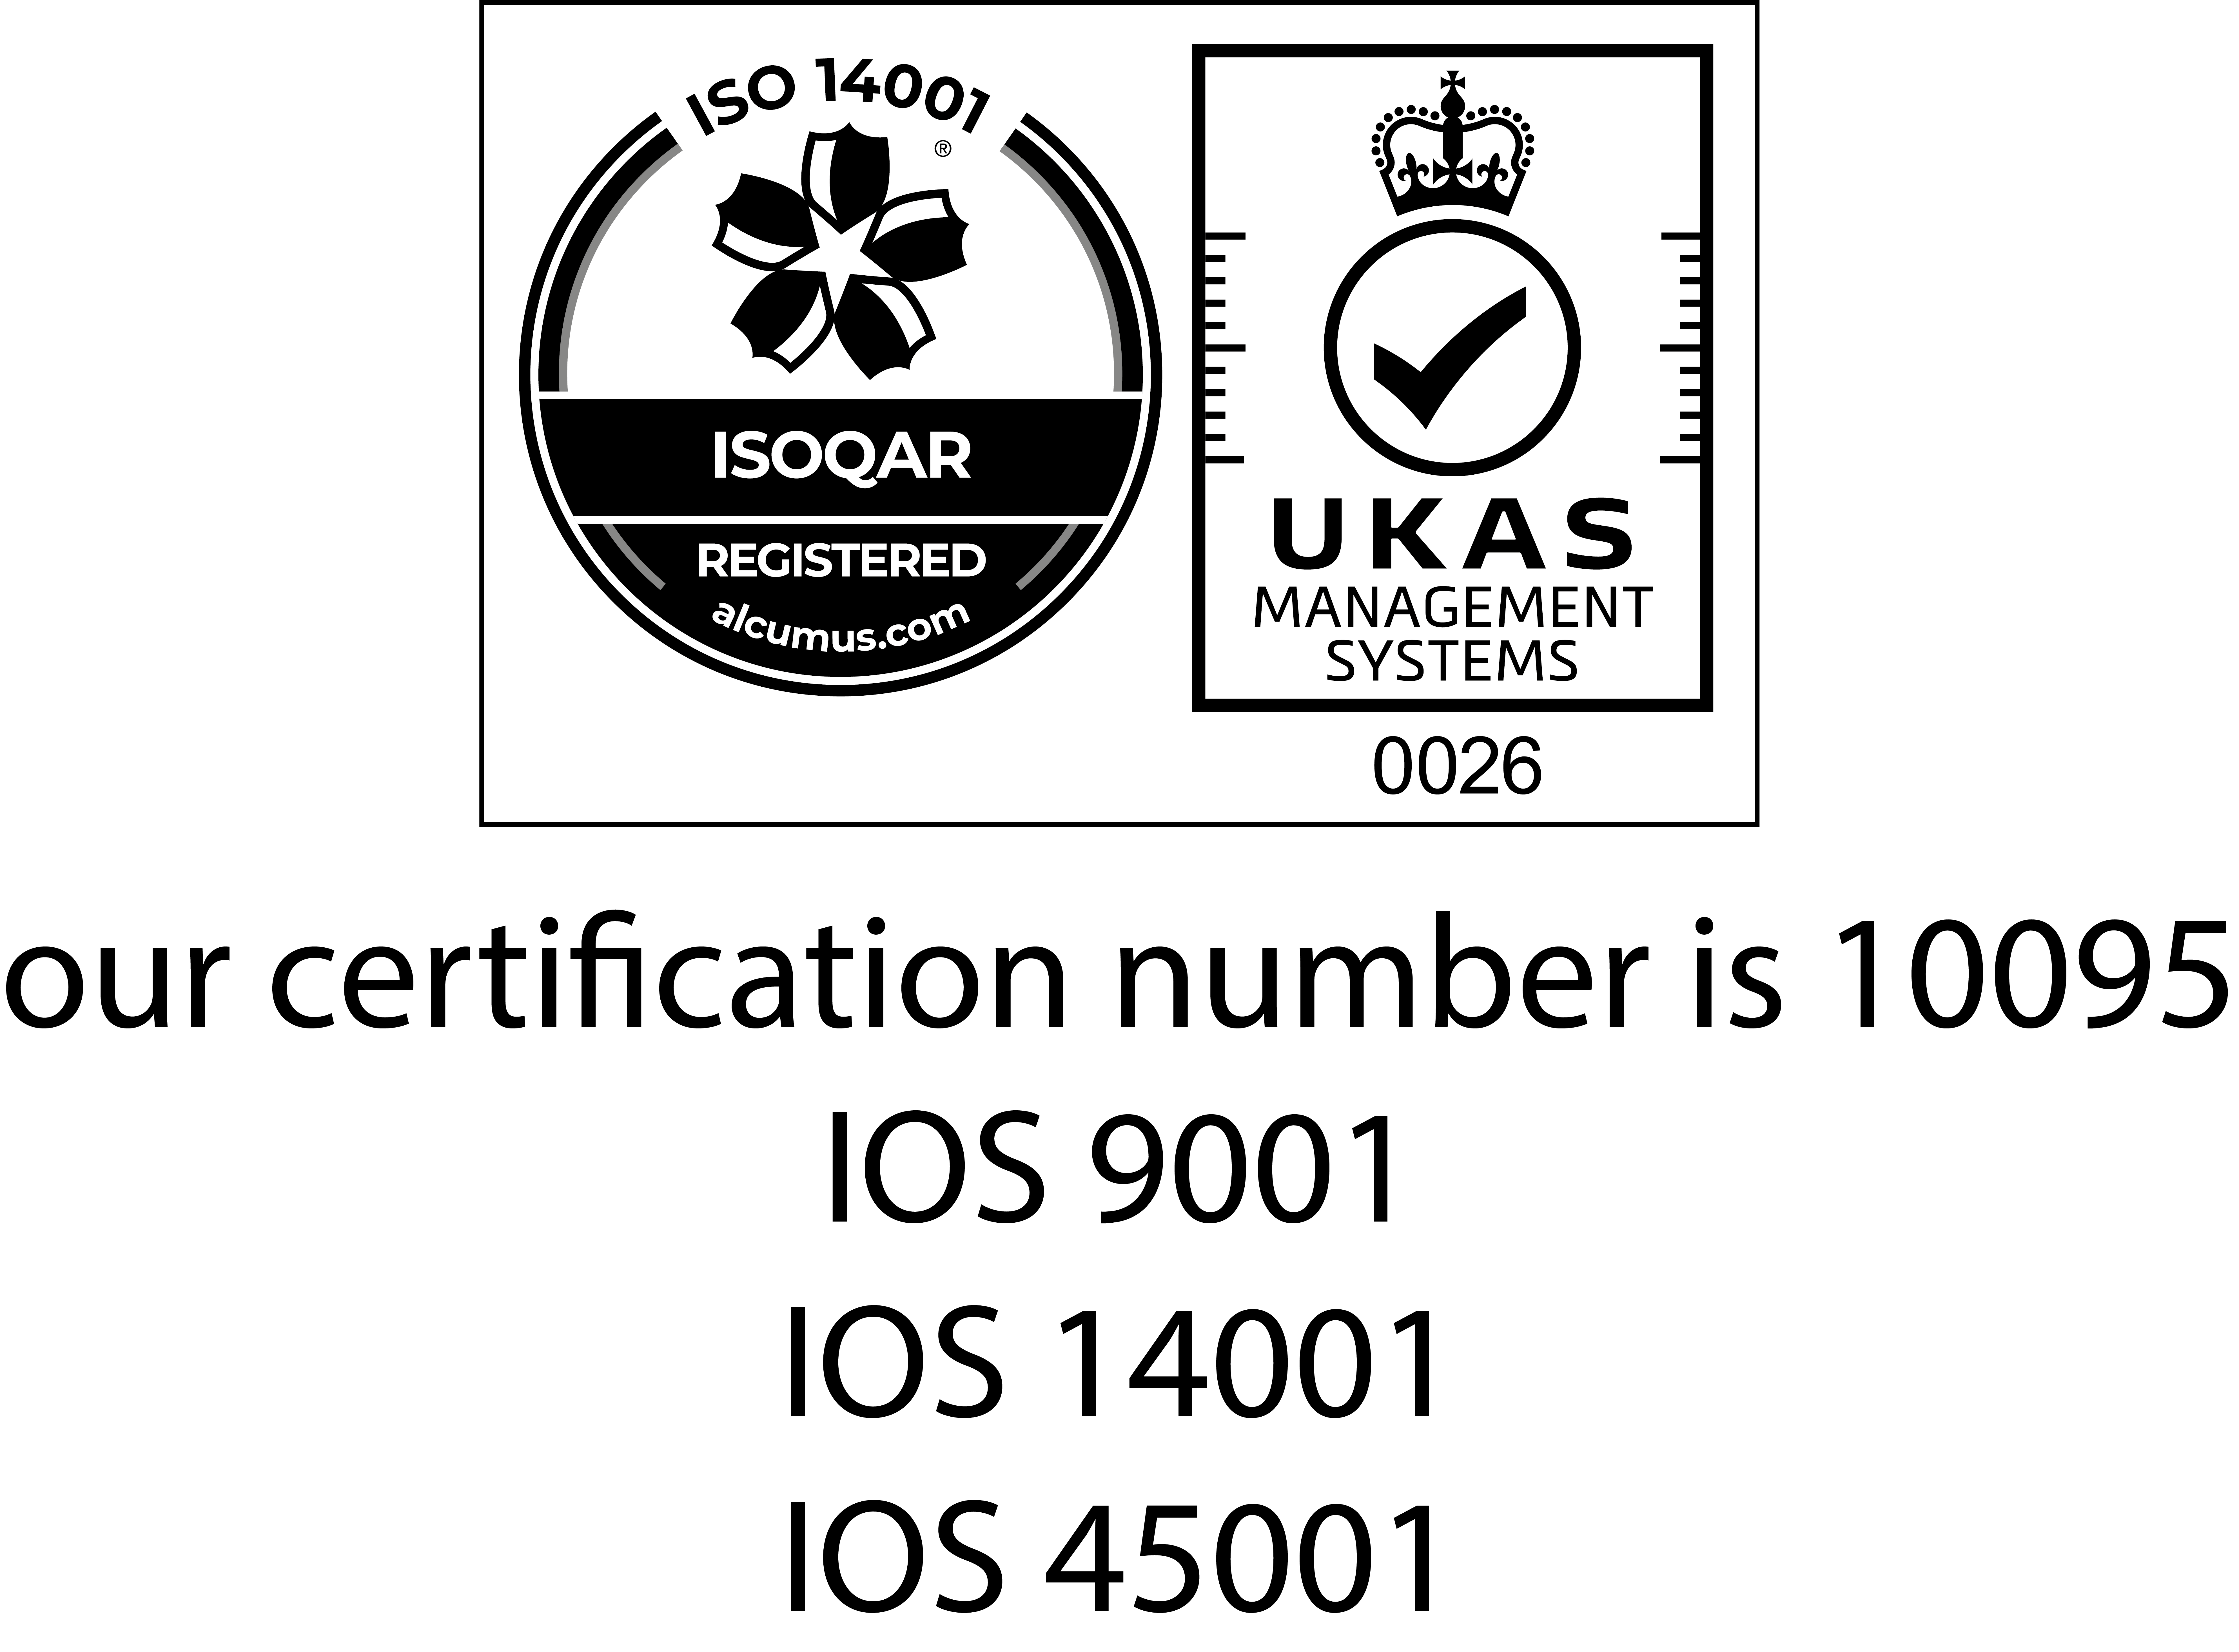 UKAS-ISO14001 lOGO